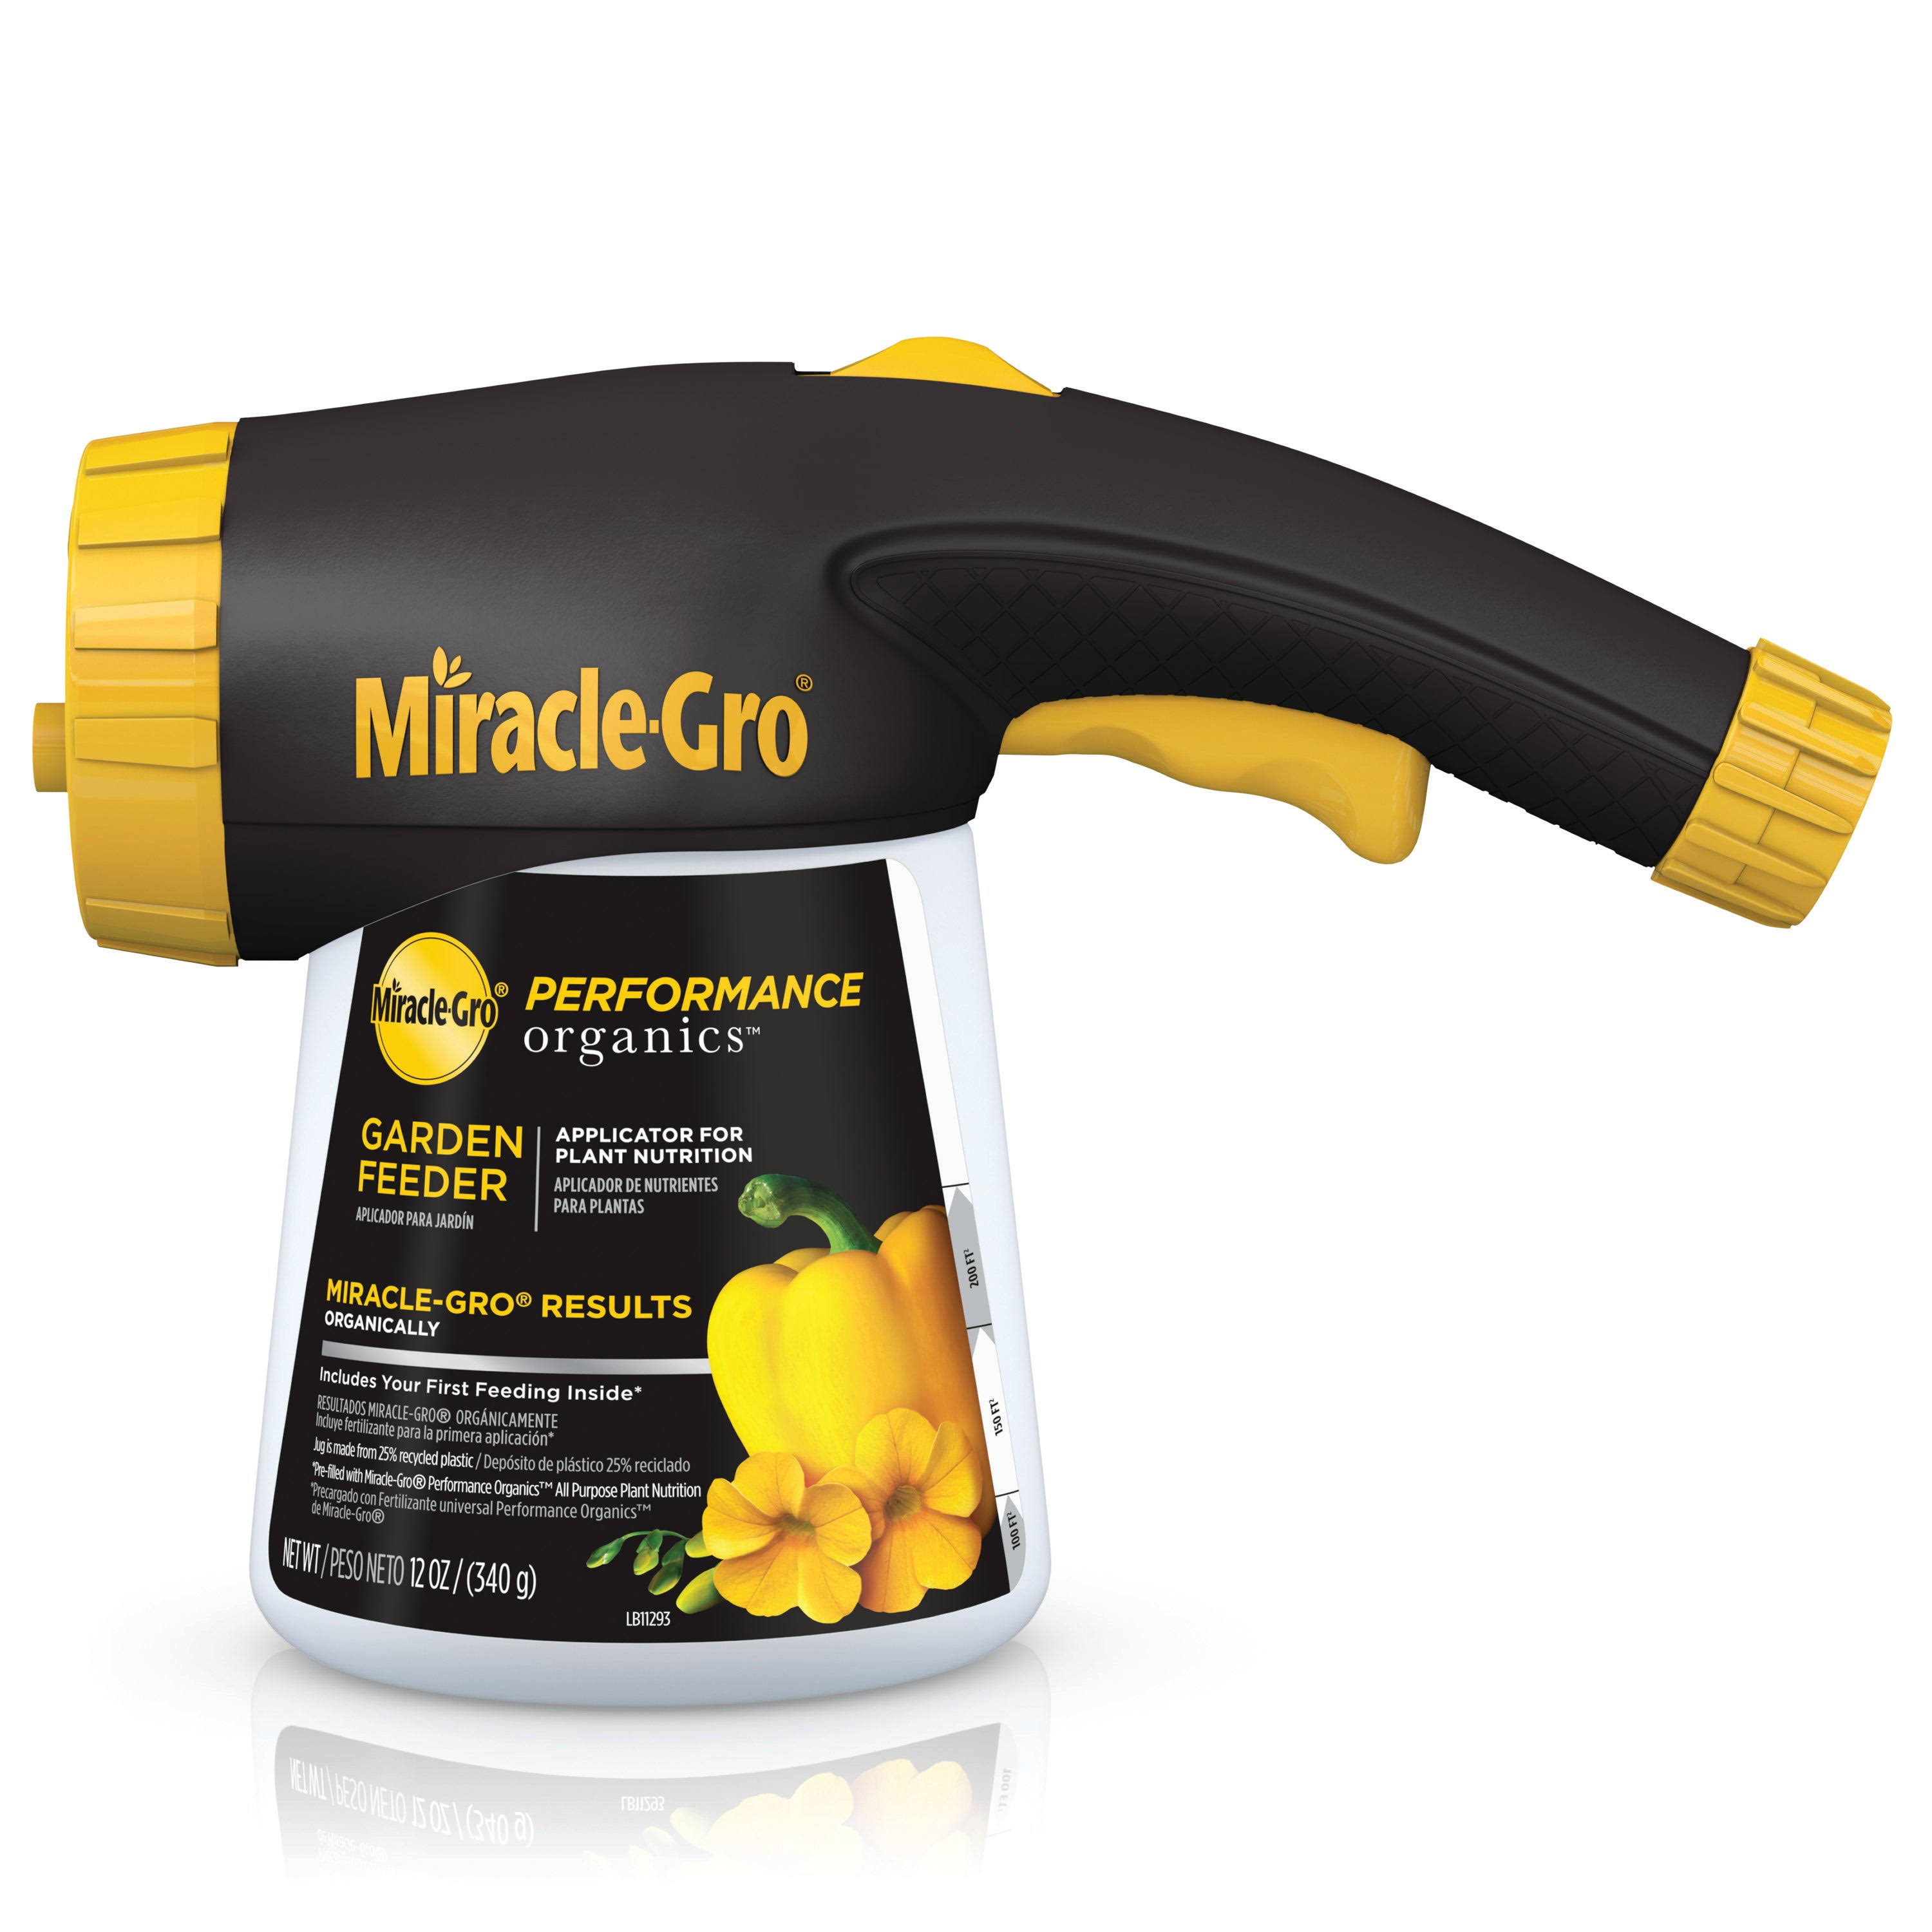 Miracle-Gro Performance Organics 3/4 Lb. Liquid Plant Food Garden Feeder 3003410